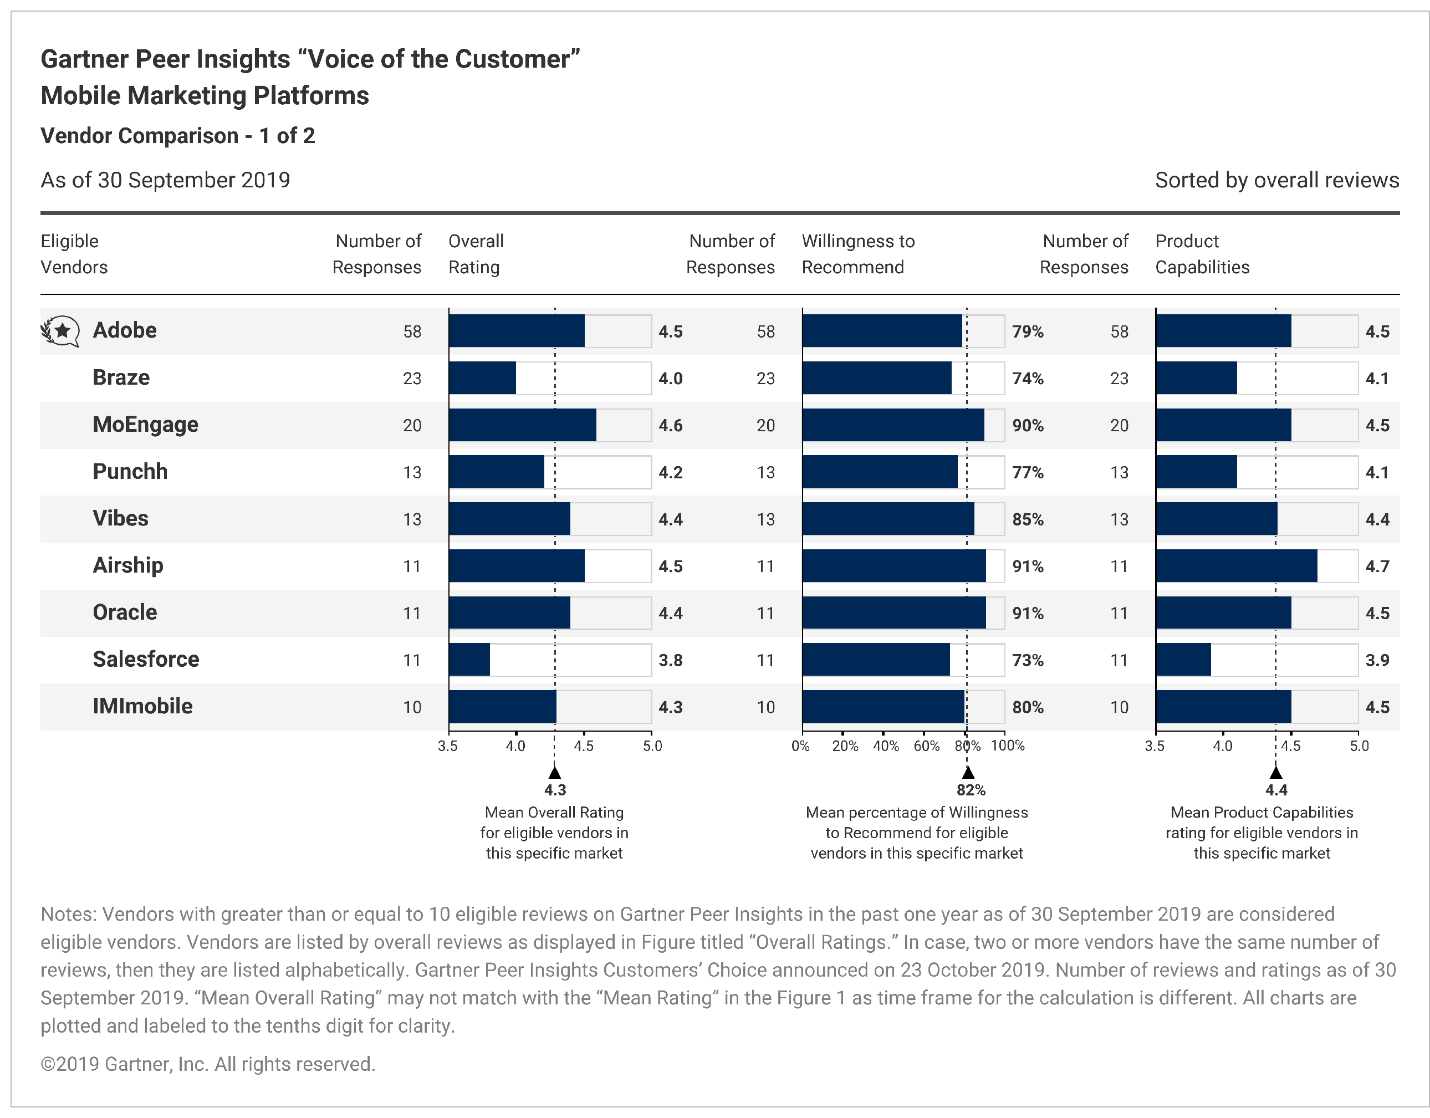 endor Comparison 1 of 2 - Gartner Peer Insights ‘Voice of the Customer’ Report for Mobile Marketing Platforms.